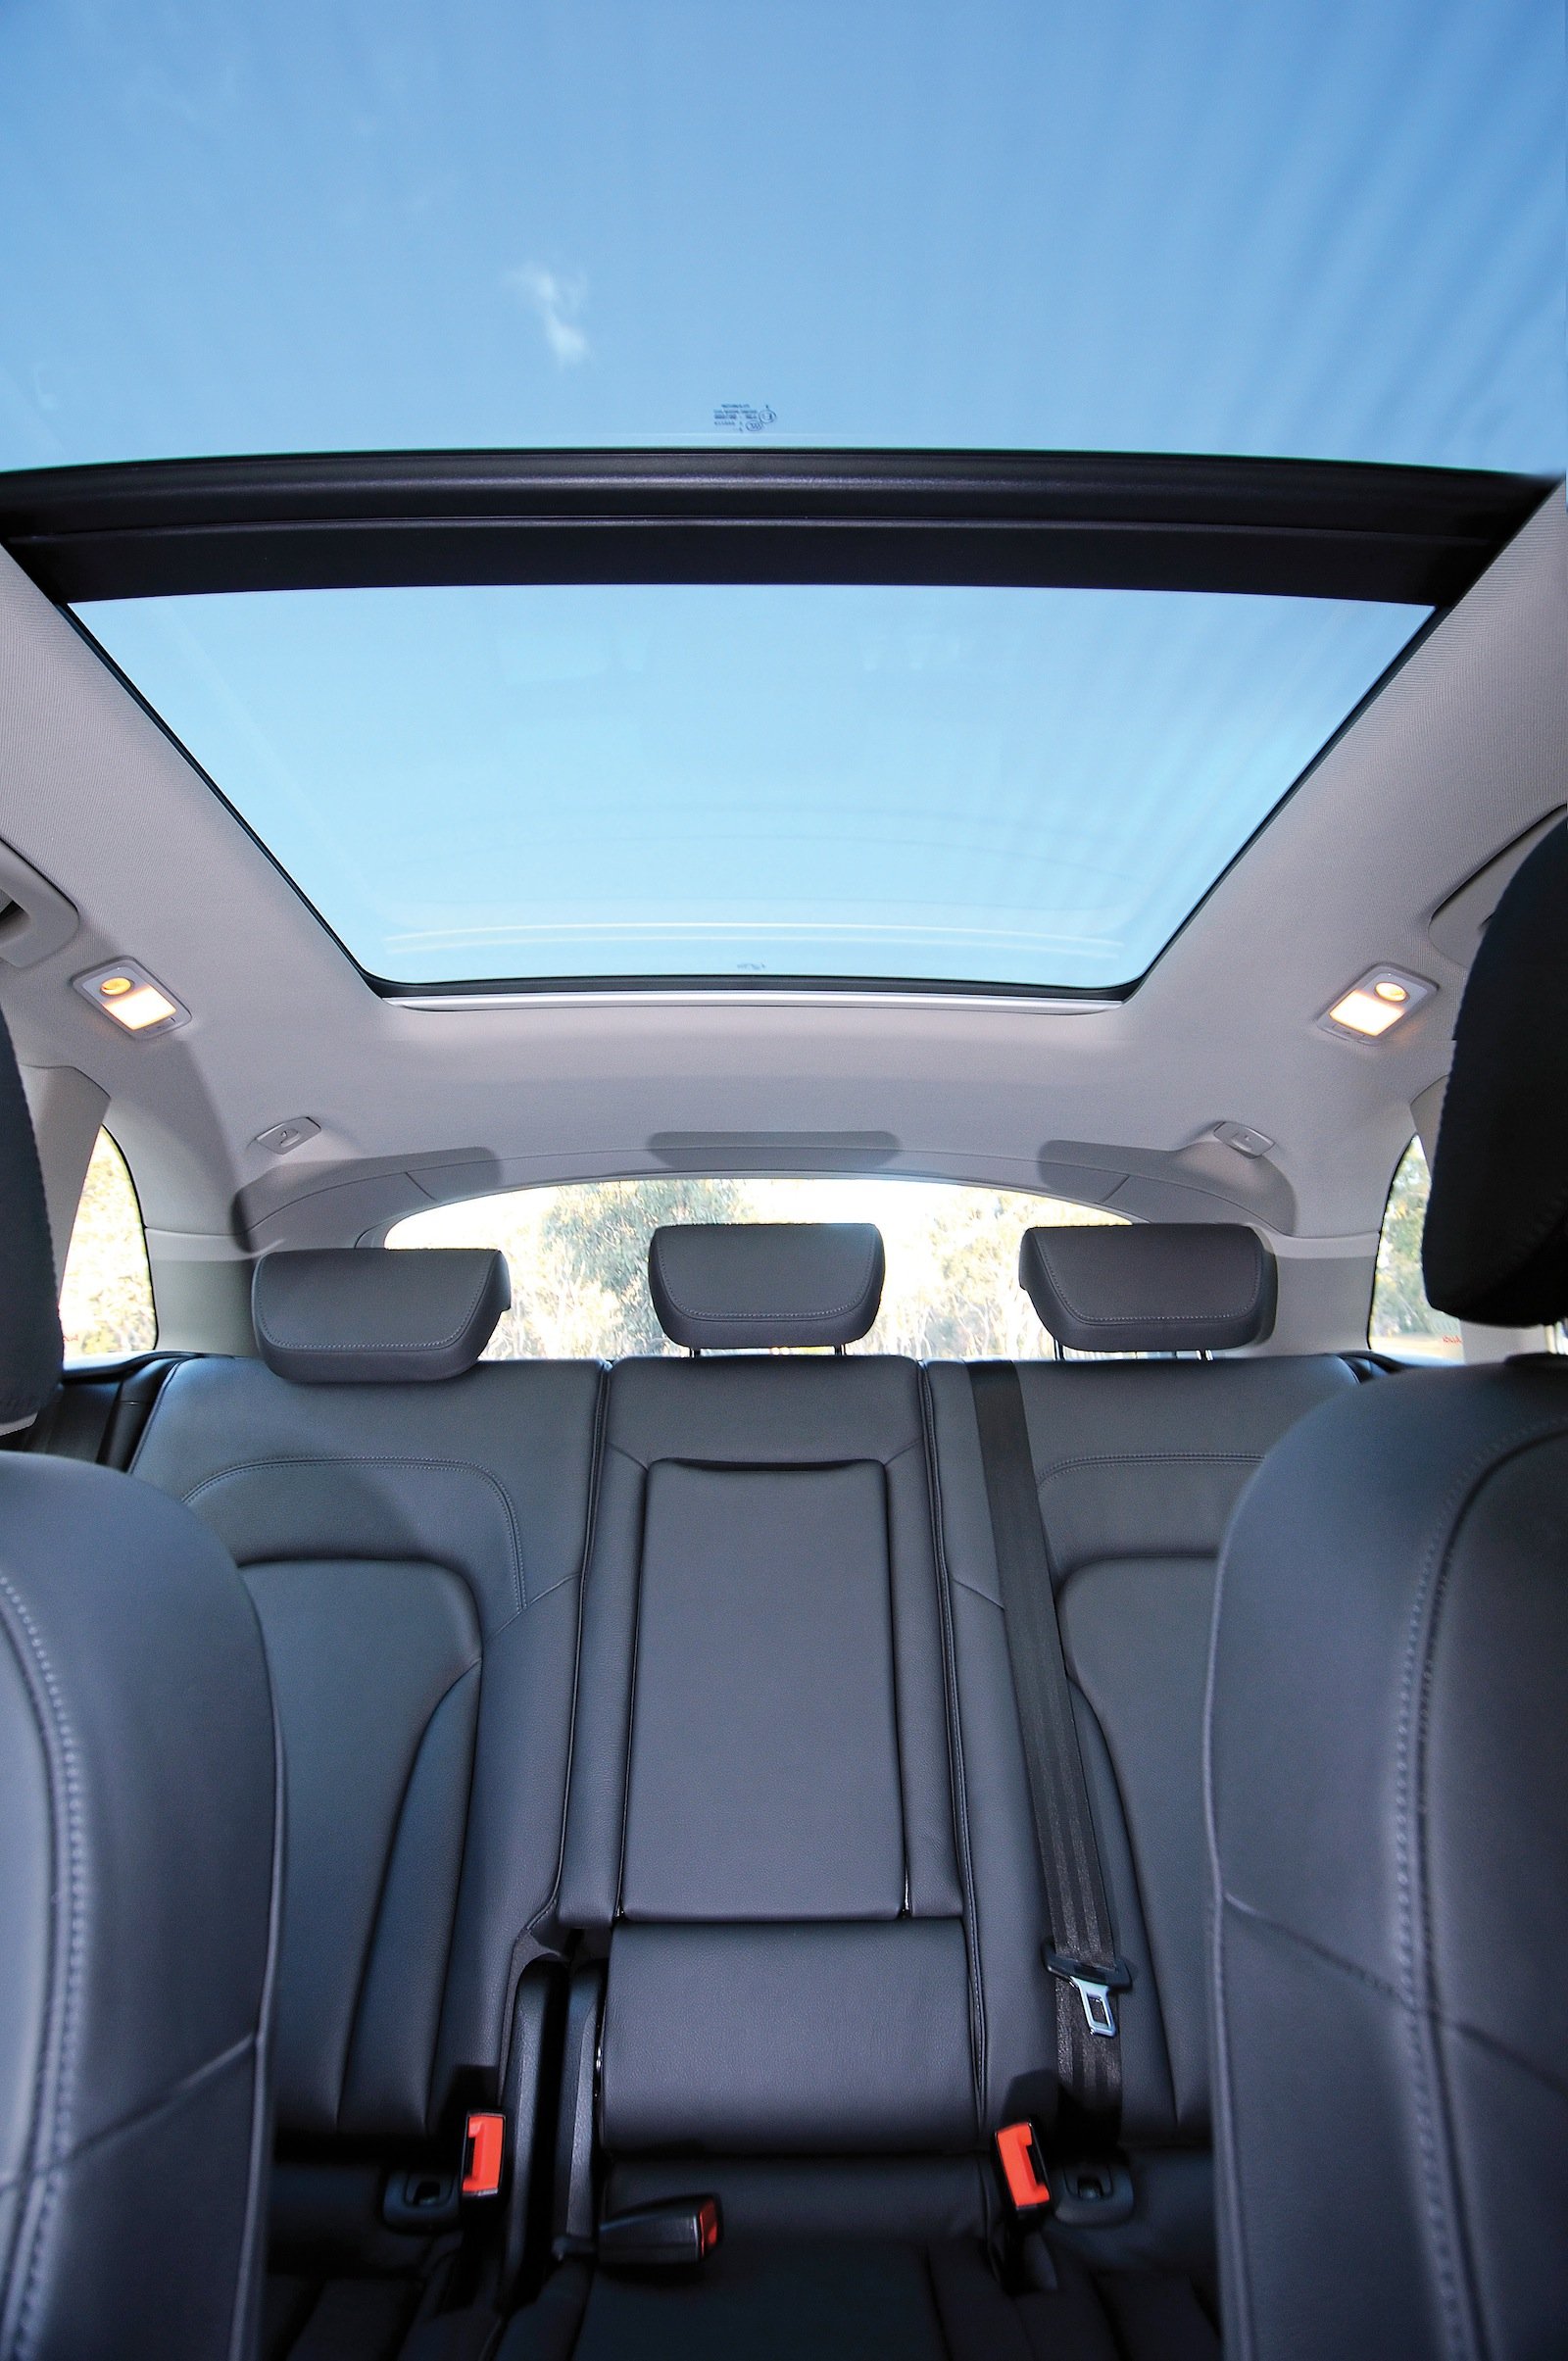 Audi Q5 recall sunroof glass shatter risk photos CarAdvice